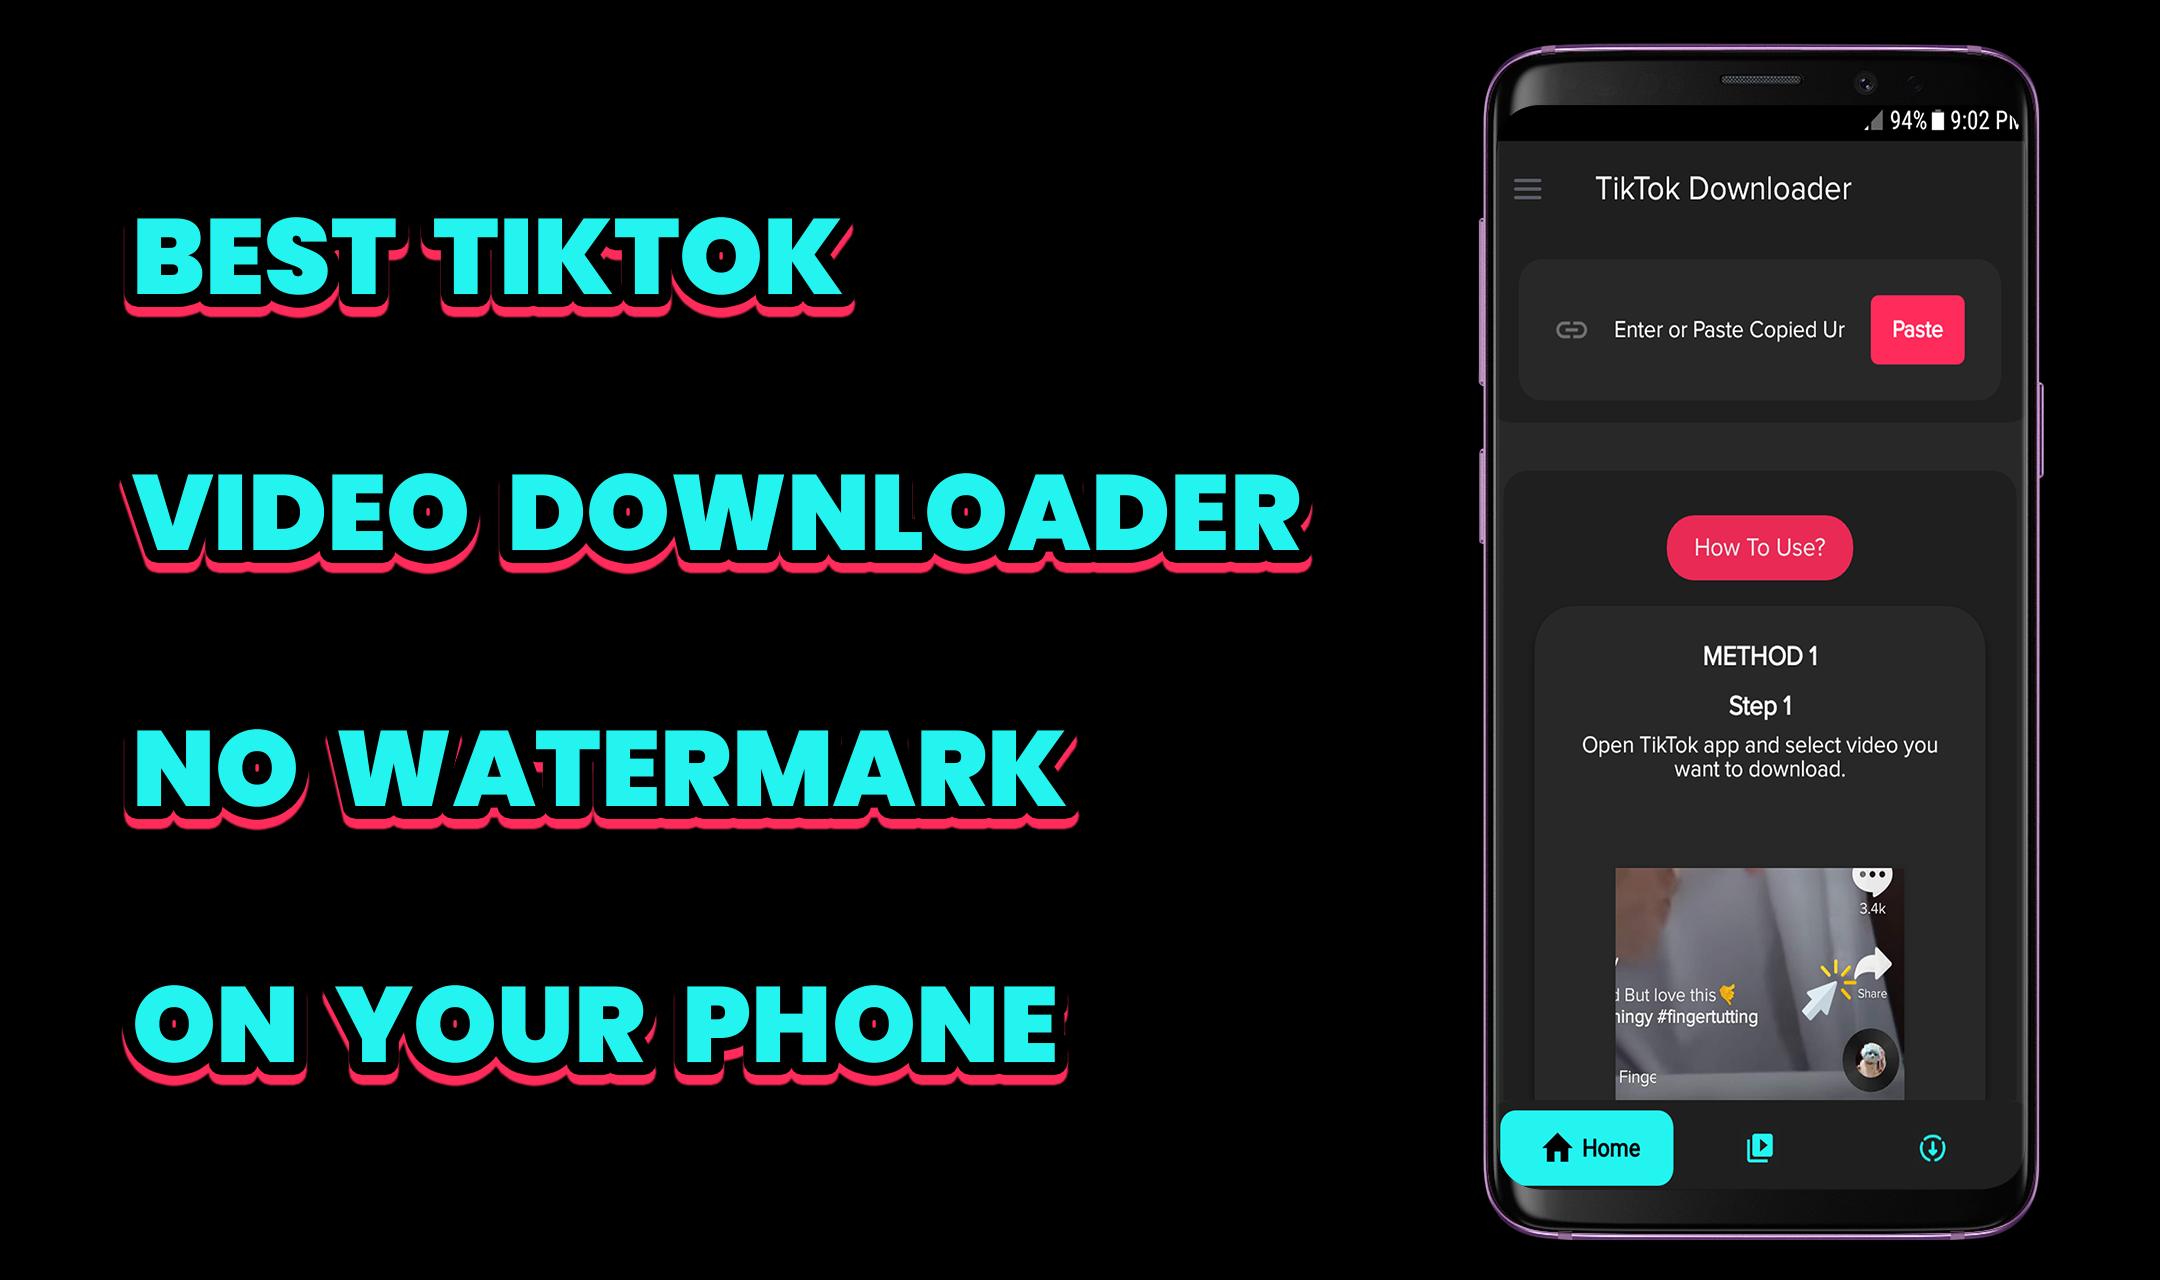 Video Downloader for TikTok - No Watermark 1.6.0 Screenshot 1